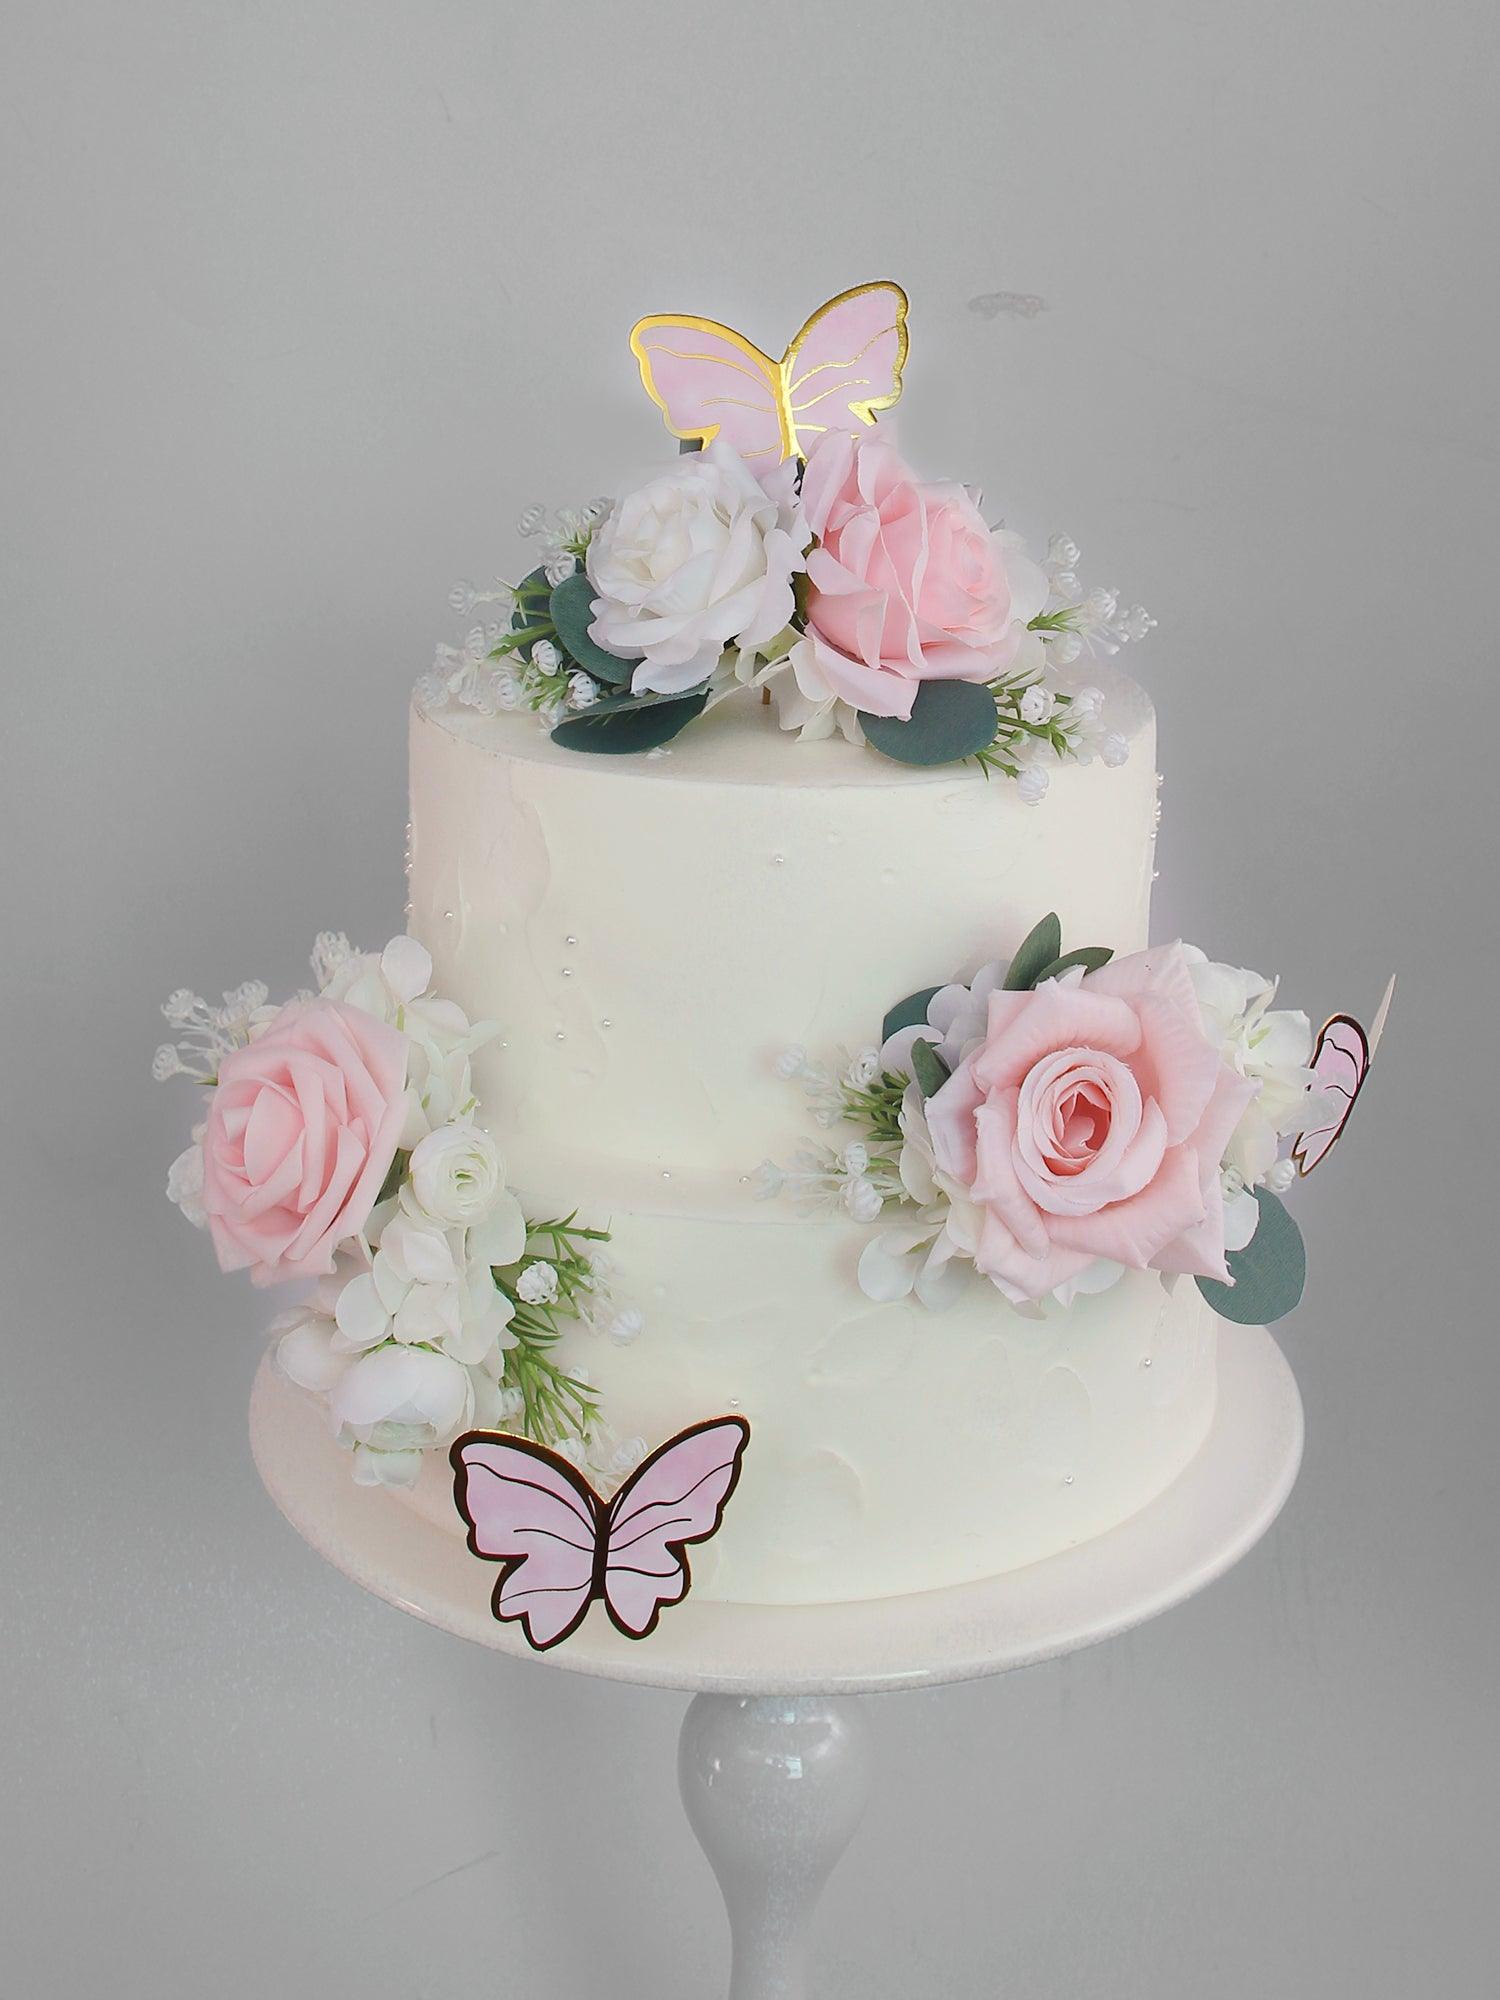 Blush Pink Flowers & Butterfly Cake Decorating Set - Rinlong Flower